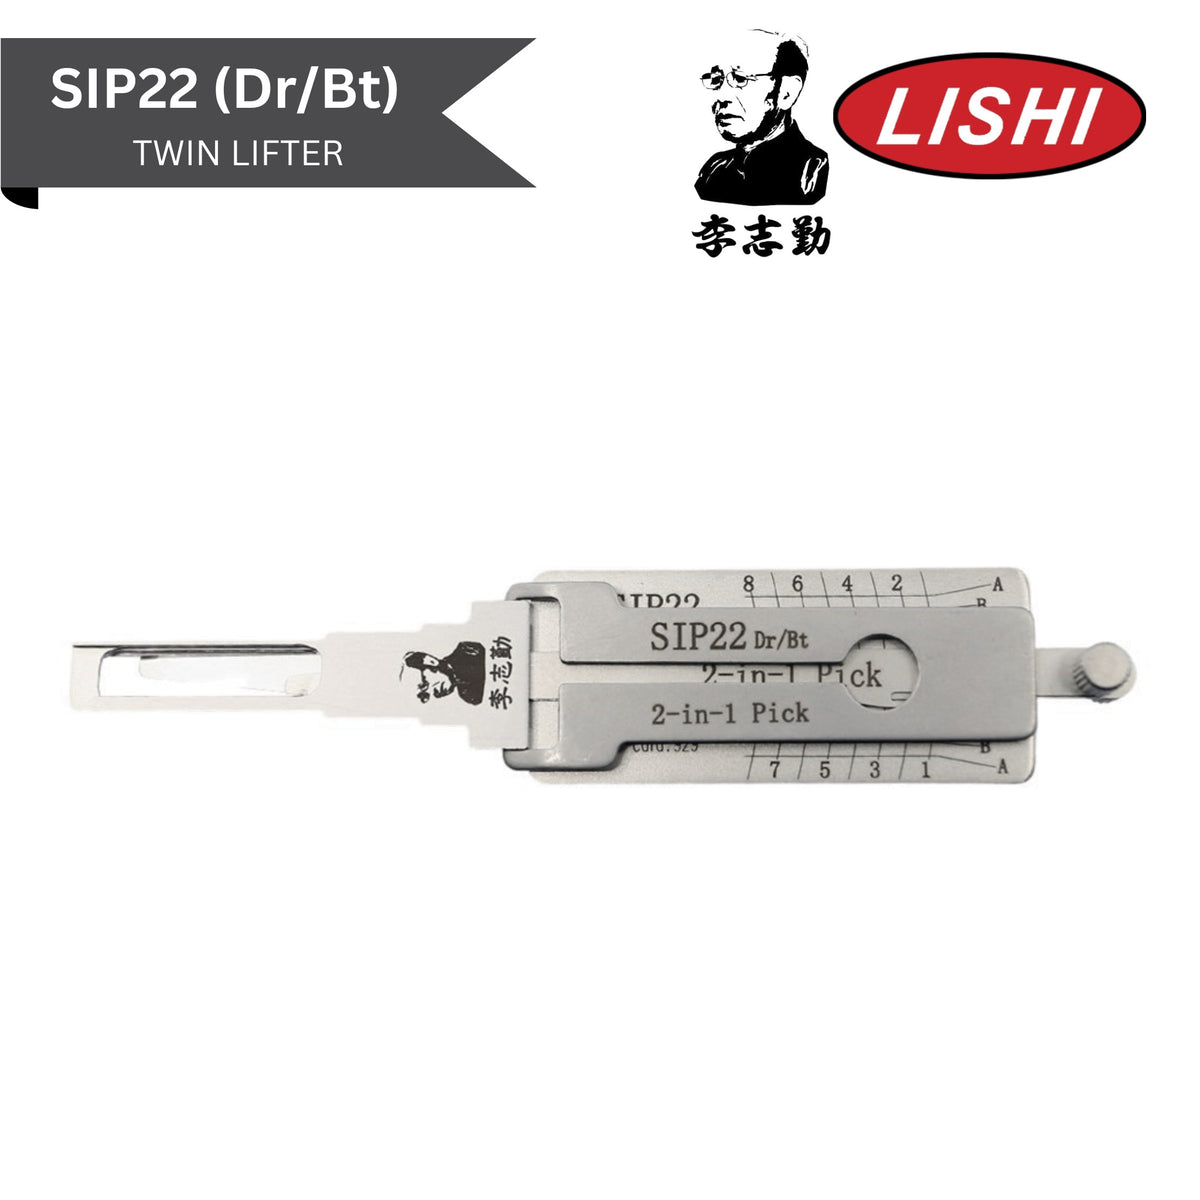 Original Lishi - Fiat SIP22 (Dr/Bt) - 2-In-1 Pick/Decoder Twin Lifter - AG